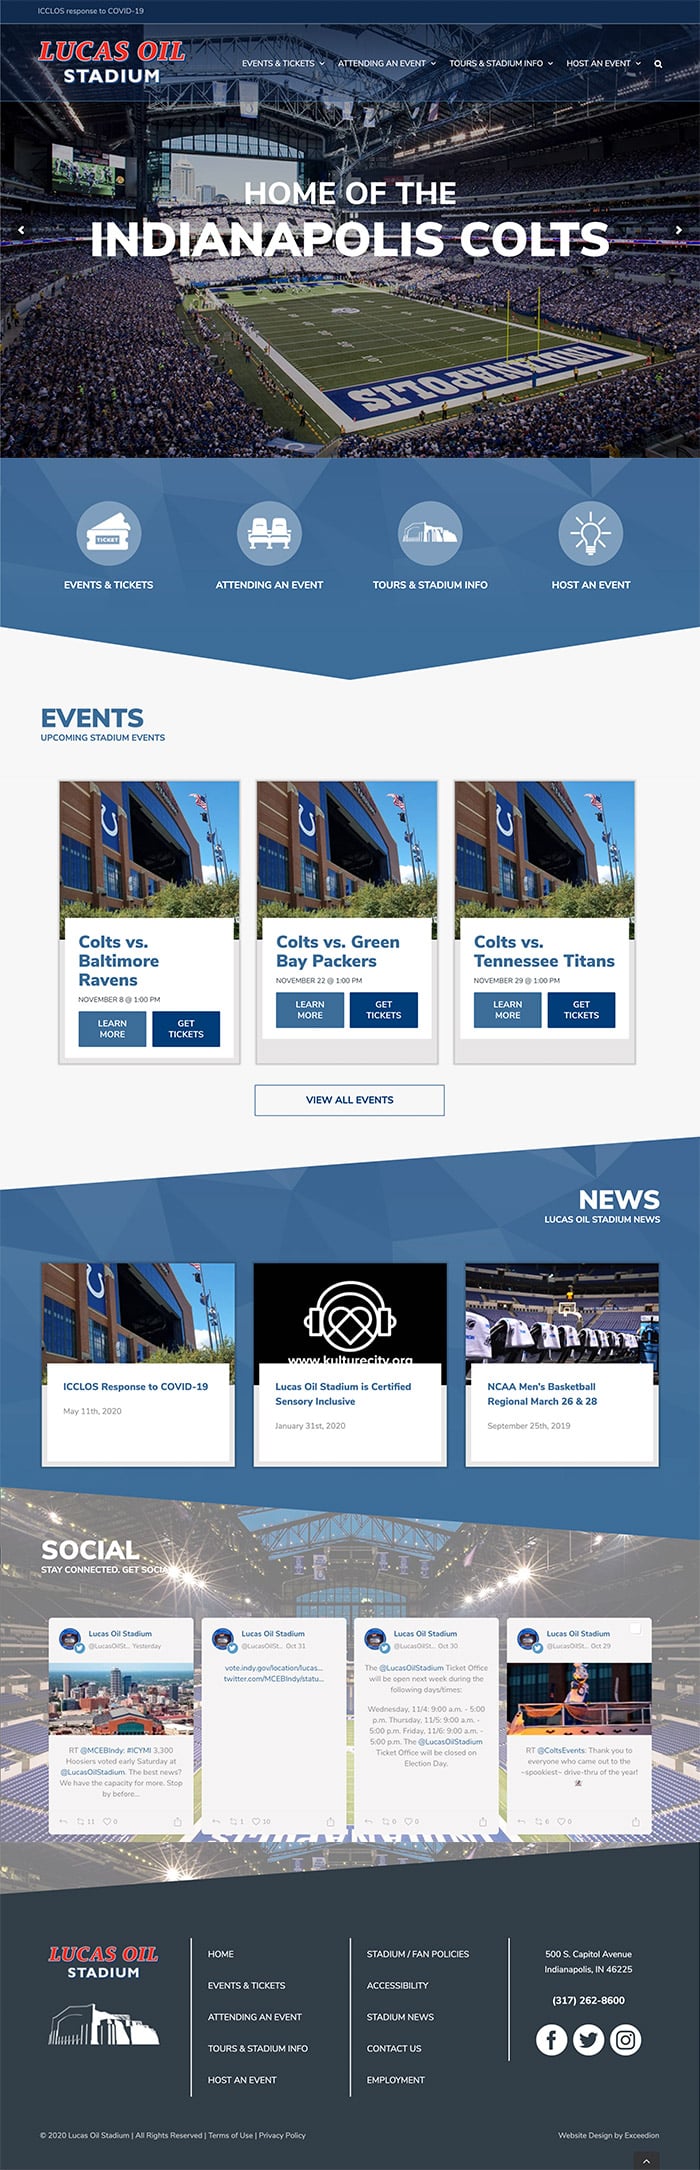 Lucas Oil Stadium WordPress Website Design